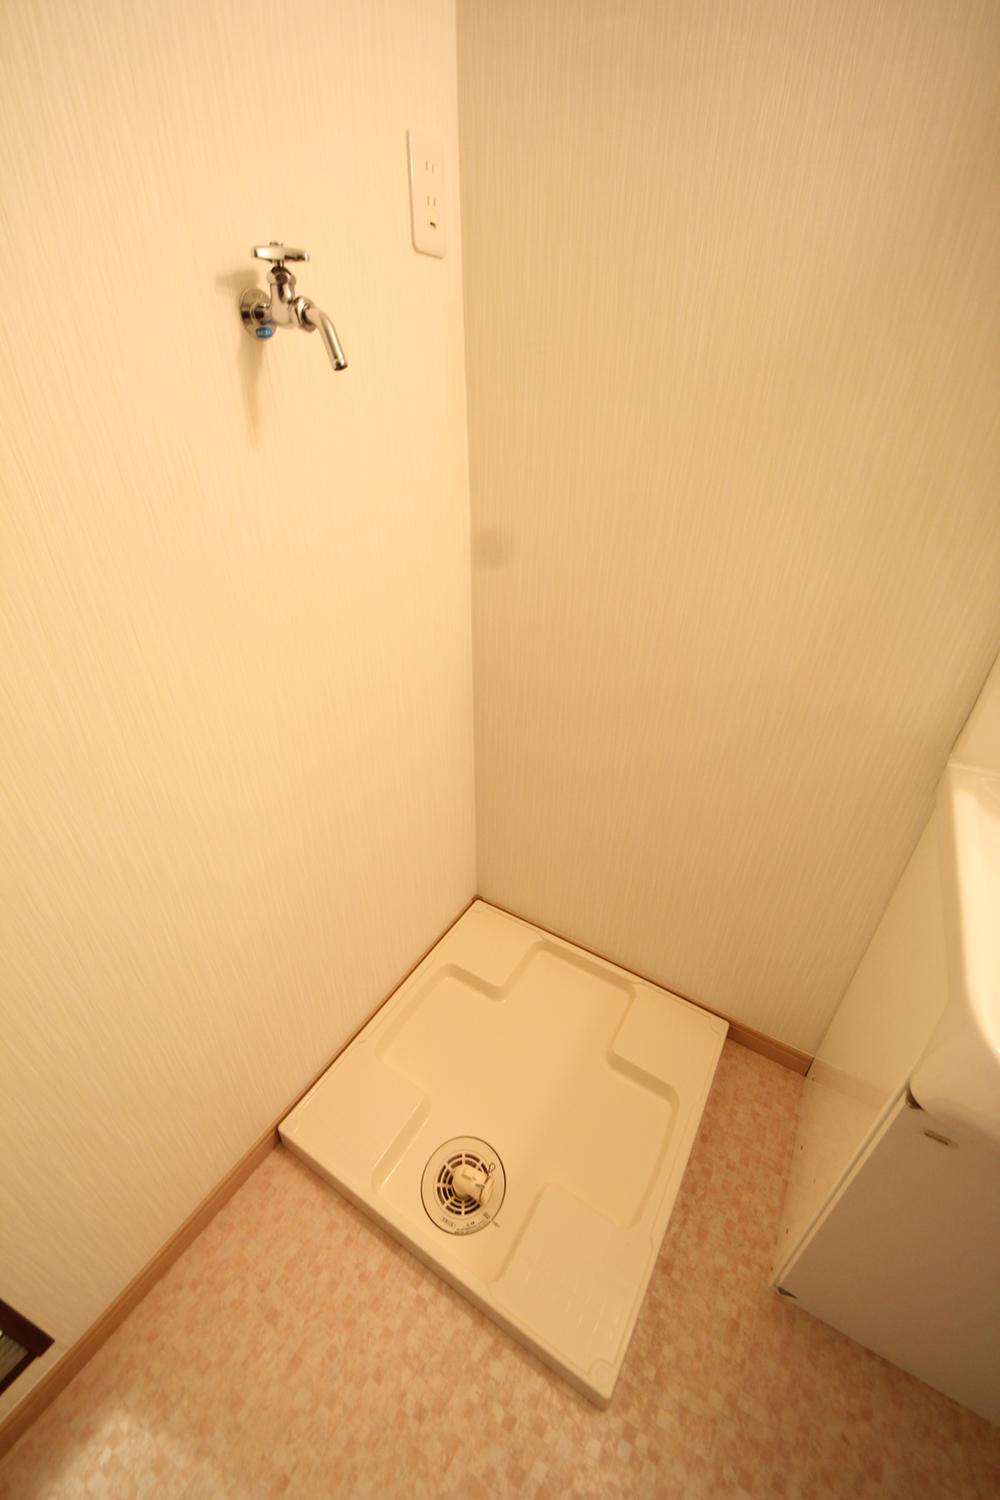 Wash basin, toilet. (October 2013) Shooting